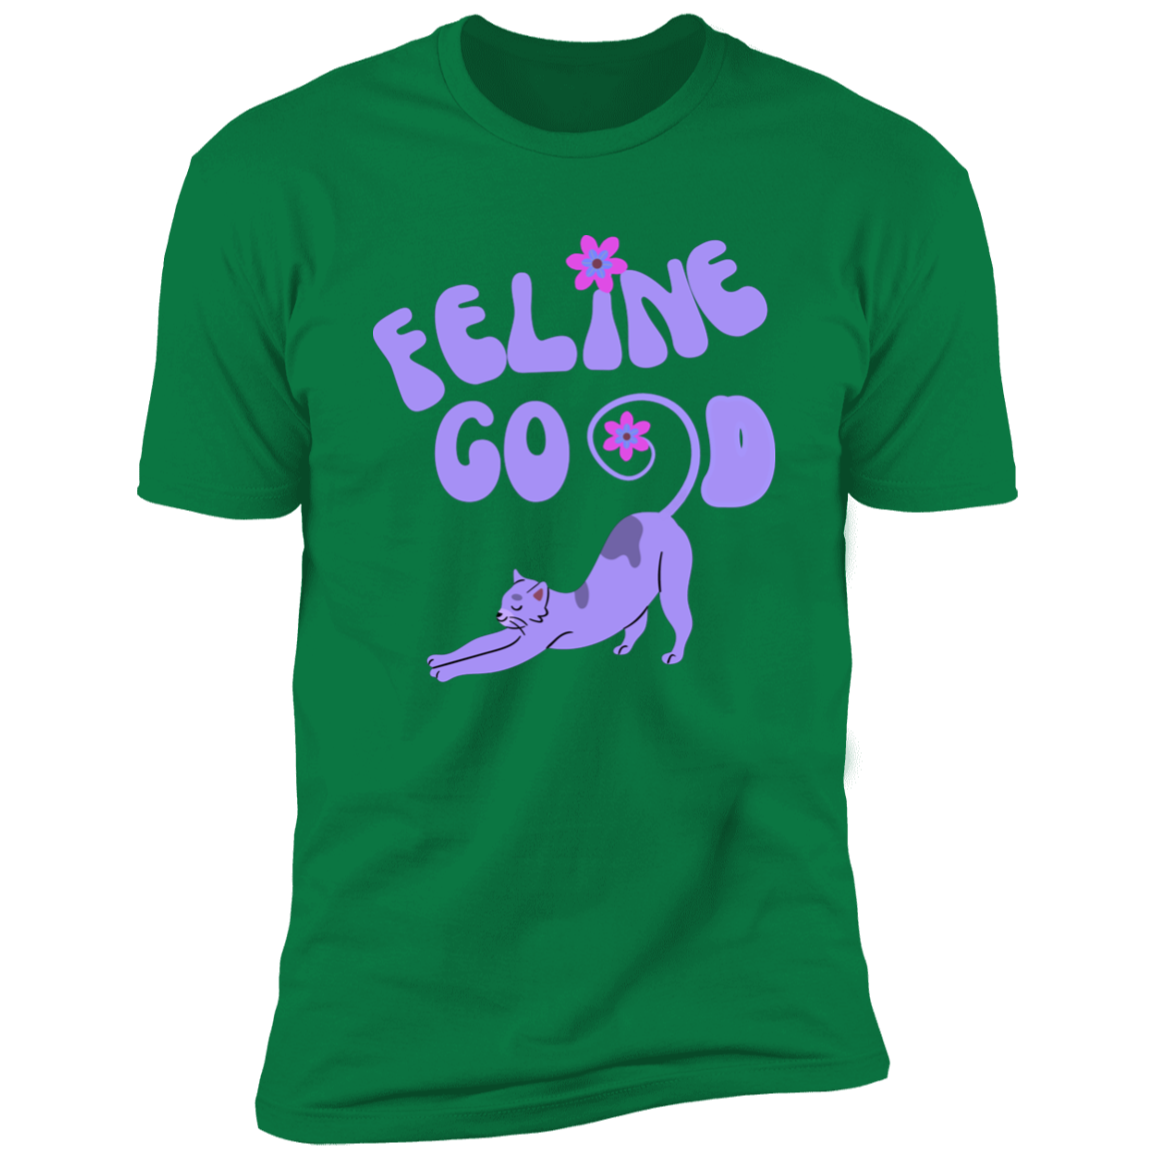 Feline Good Cat T-Shirt, Cat Shirt for humans, in kelly green